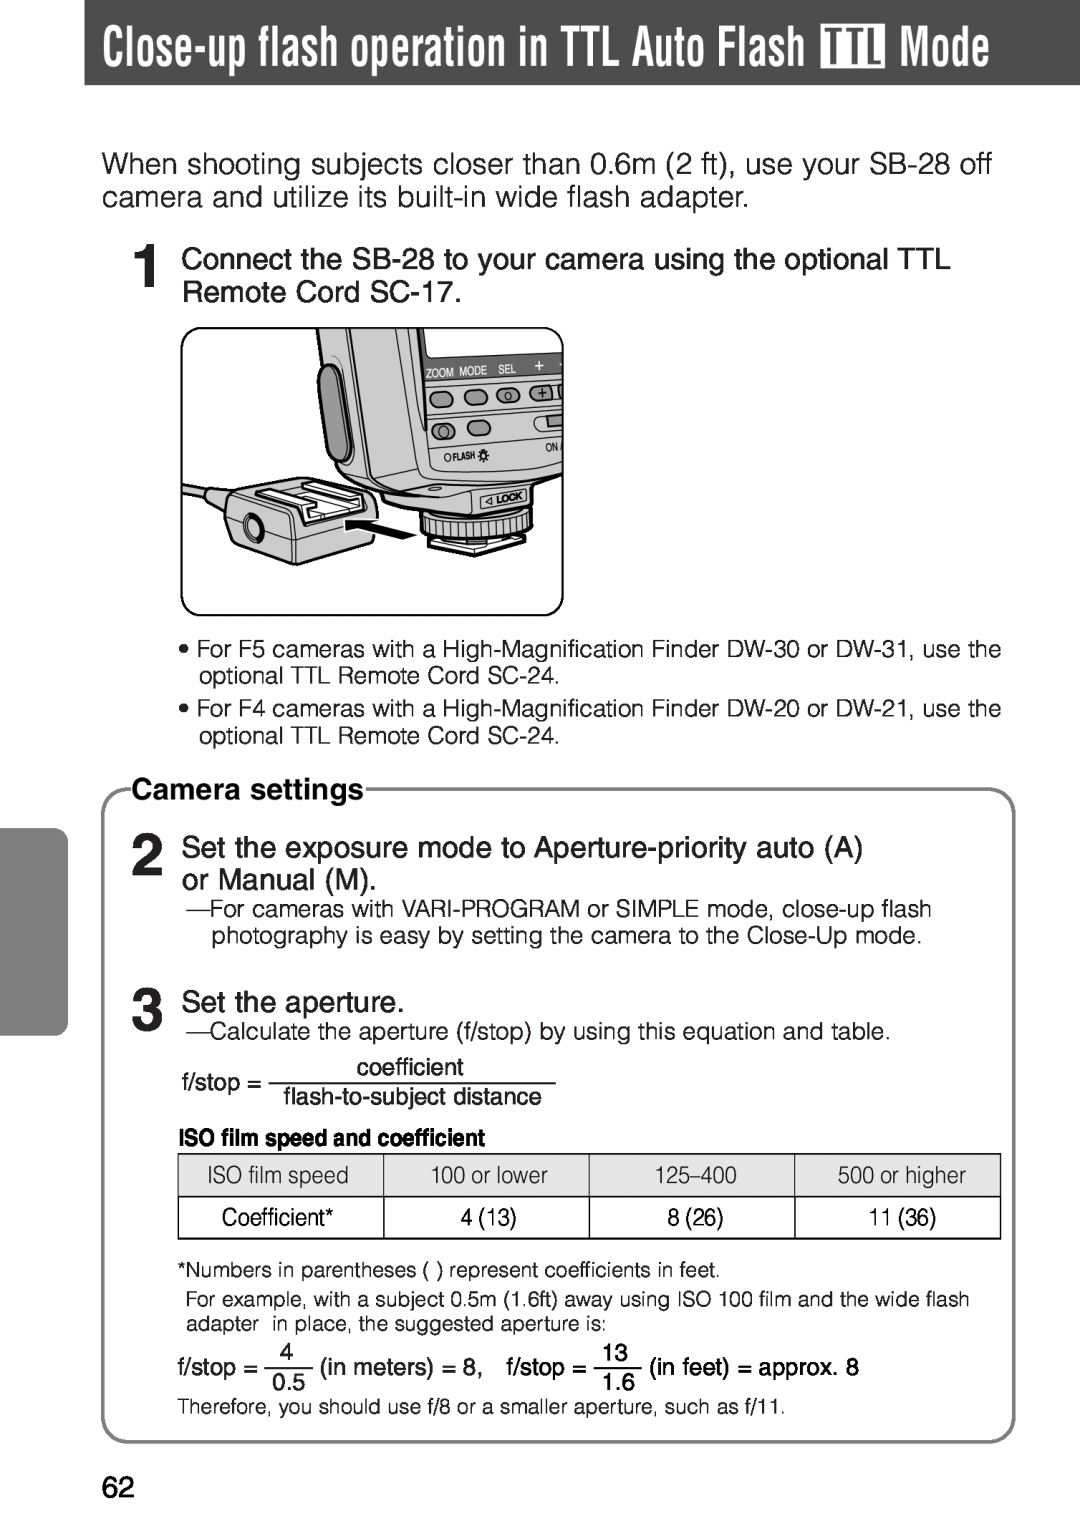 Nikon SB-28 instruction manual Close-upflash operation in TTL Auto Flash t Mode, Camera settings 